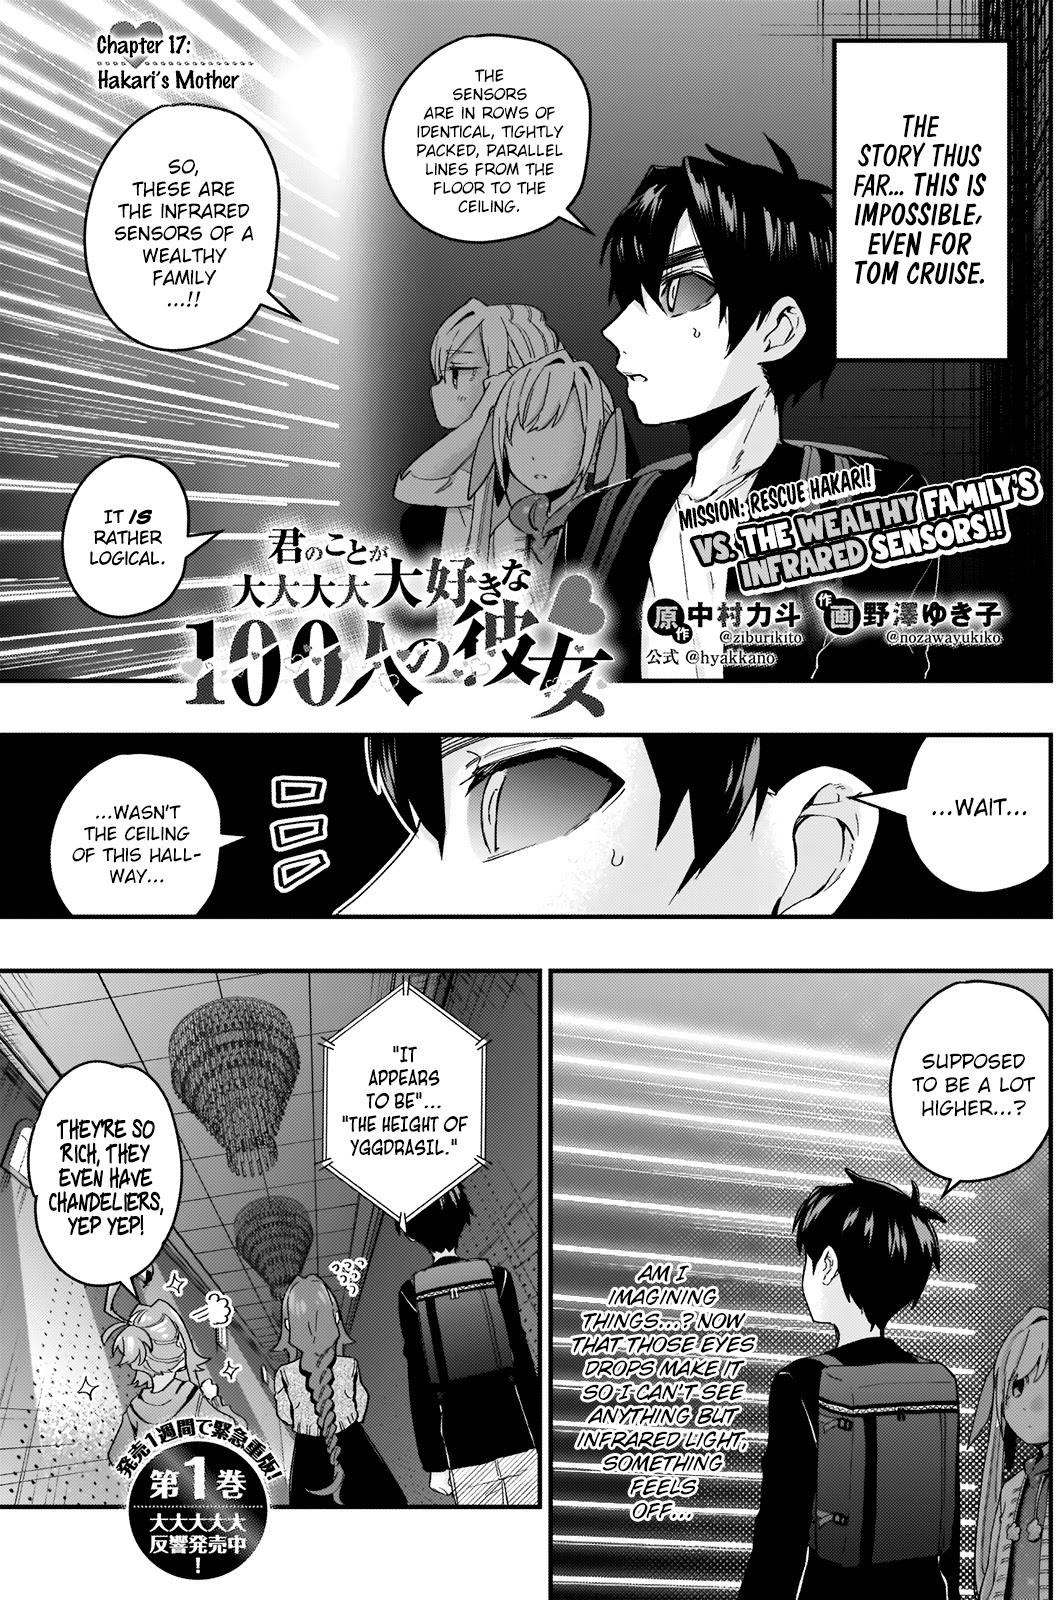 Read Oh! Holy Chapter 10 on Mangakakalot